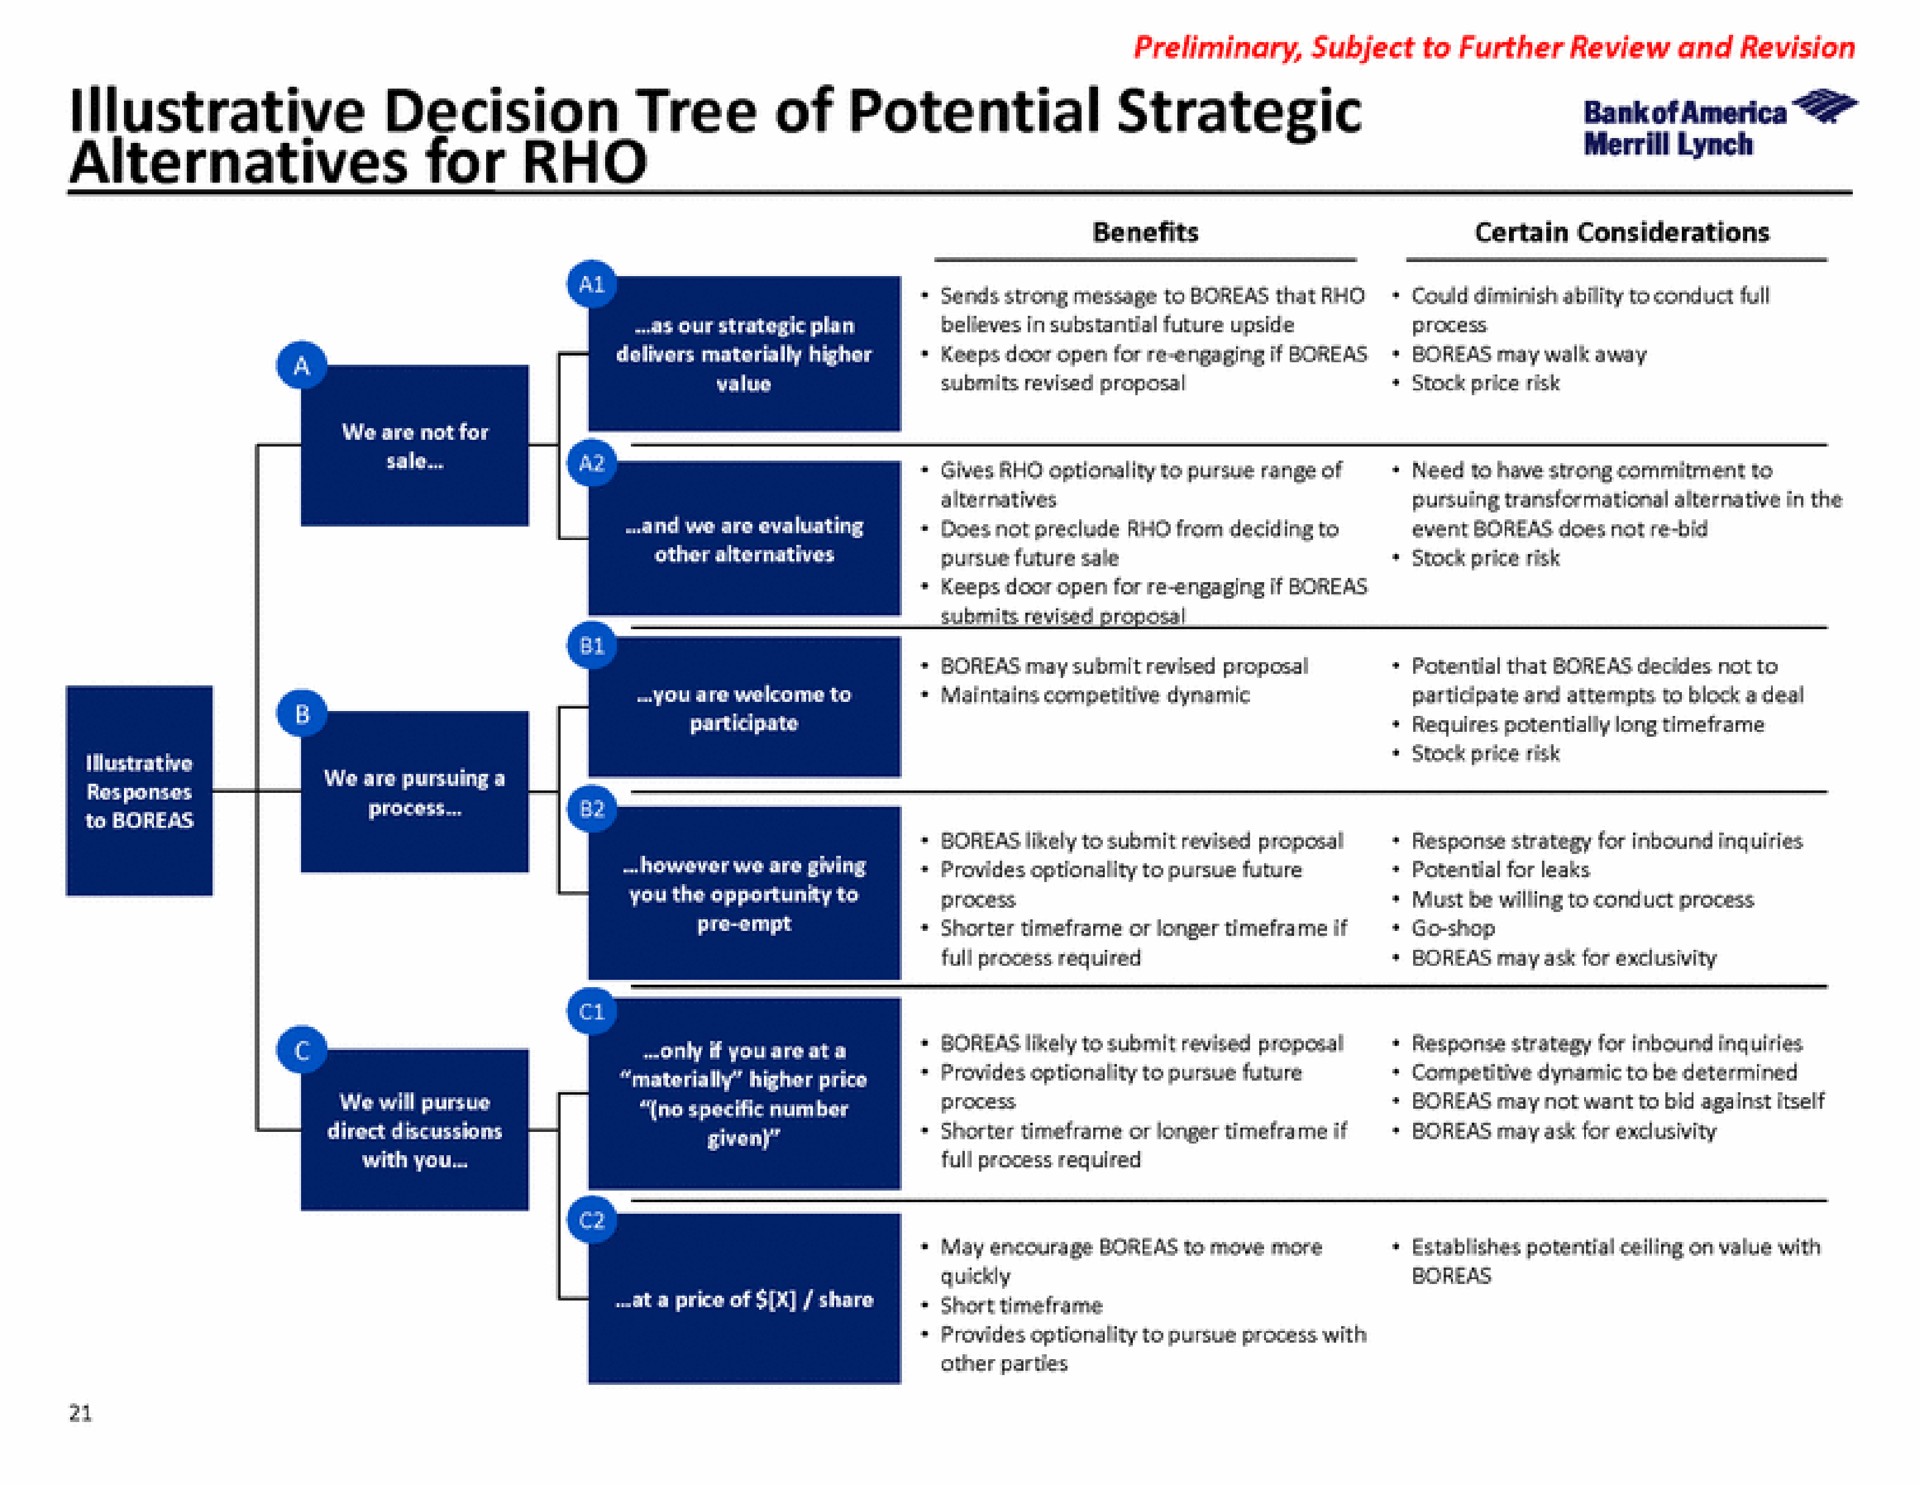 illustrative decision tree of potential strategic alternatives for rho lynch | Bank of America